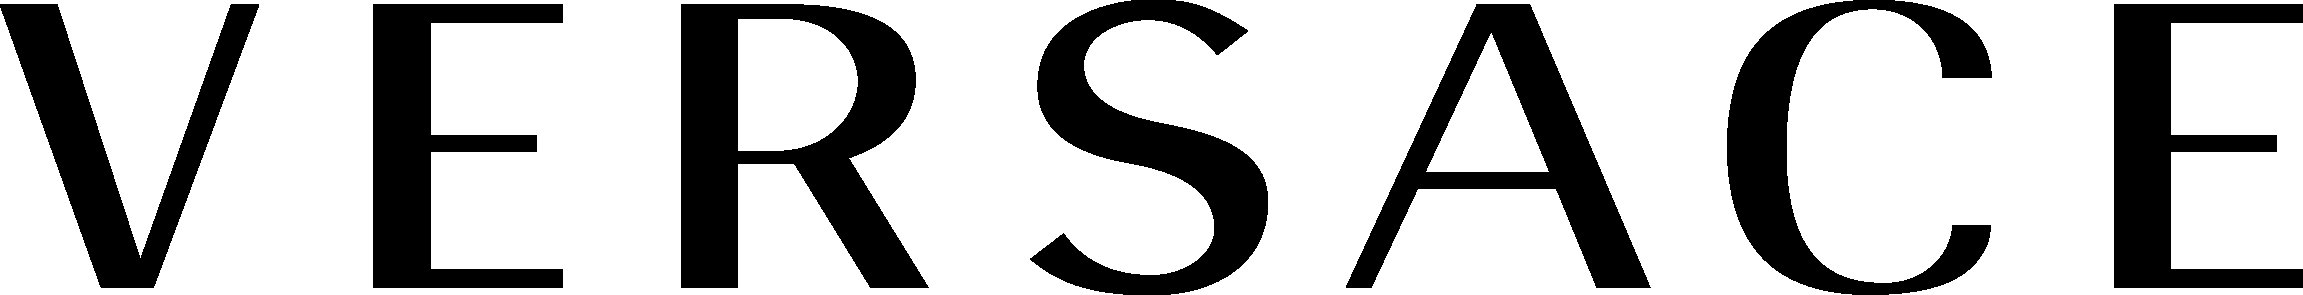 Versace Logo Transparent Images